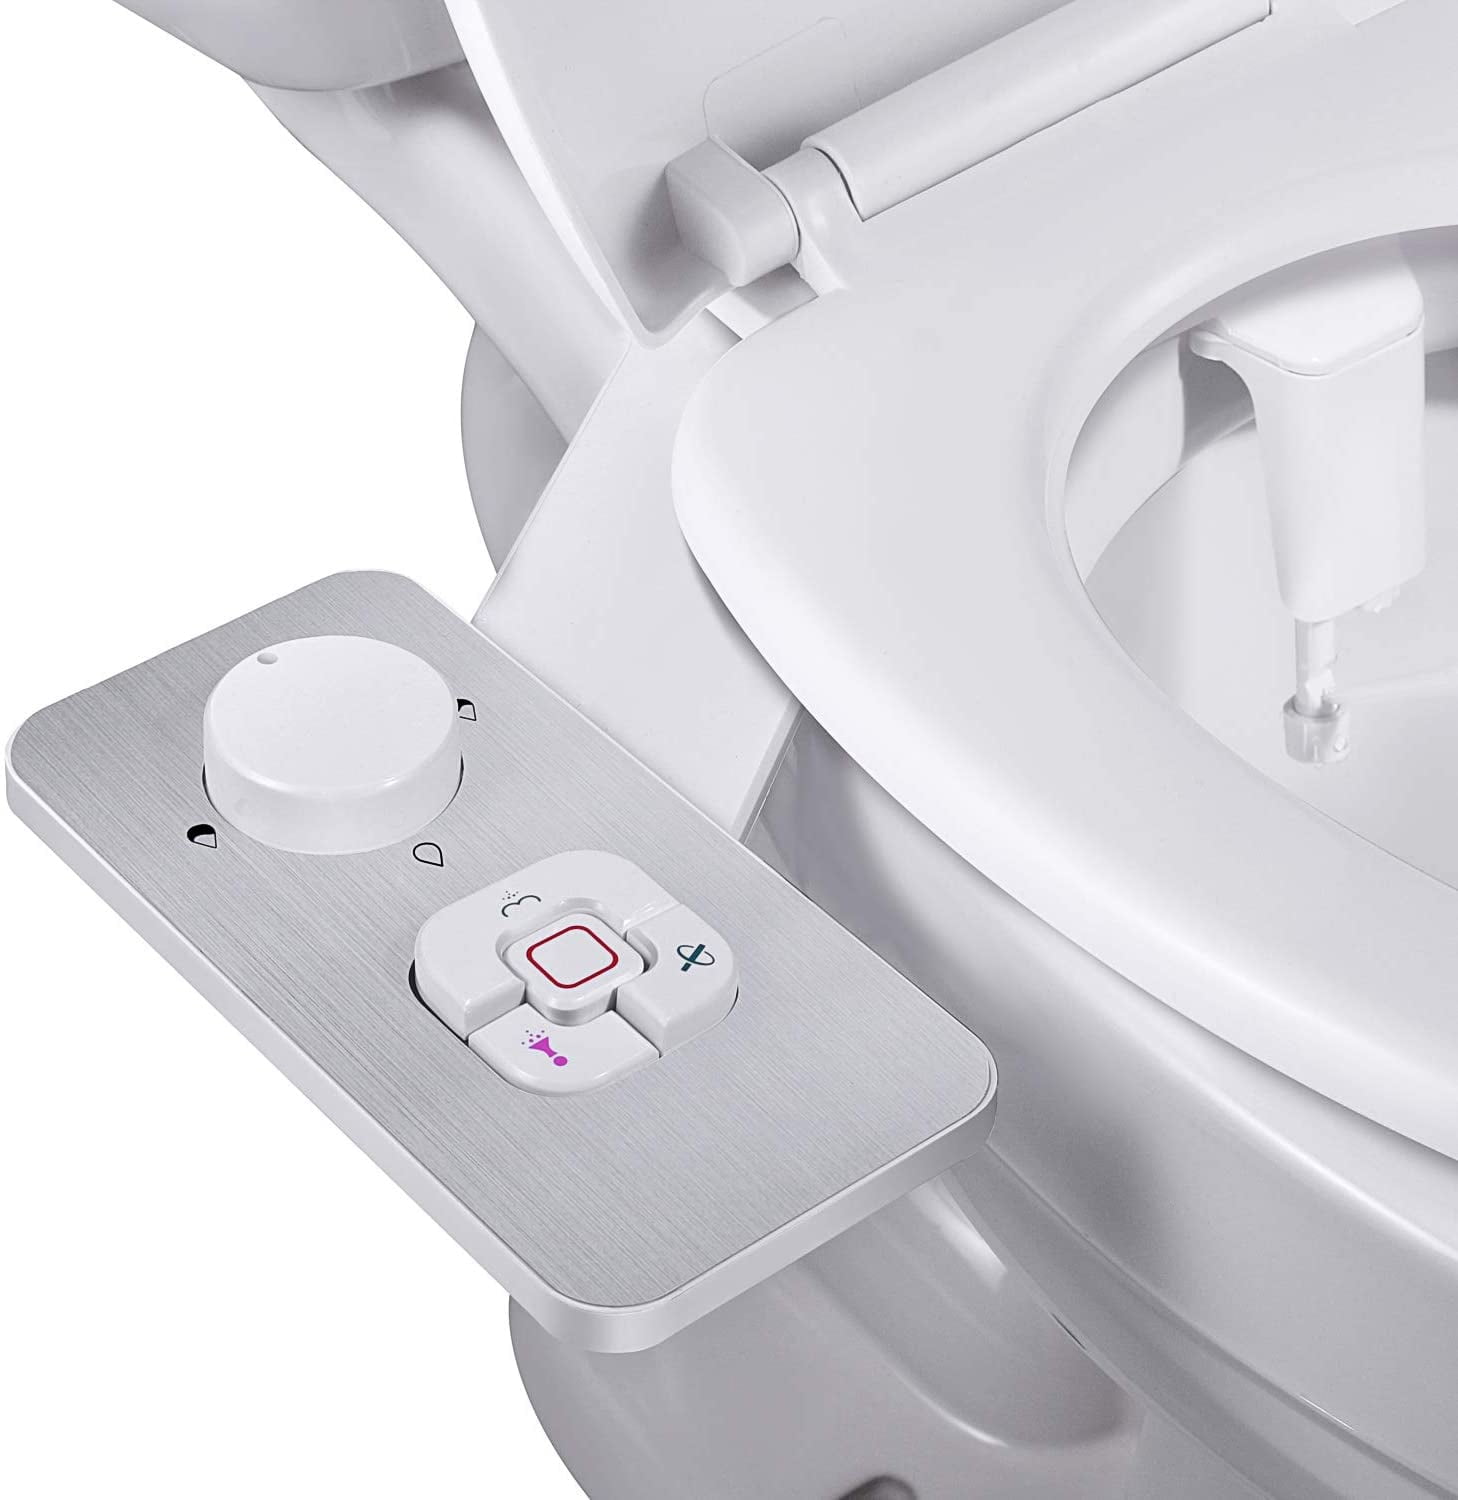 Dual Nozzle Non-Electric Cold Fresh Water Spray Bidet Toilet Seat Attachment 